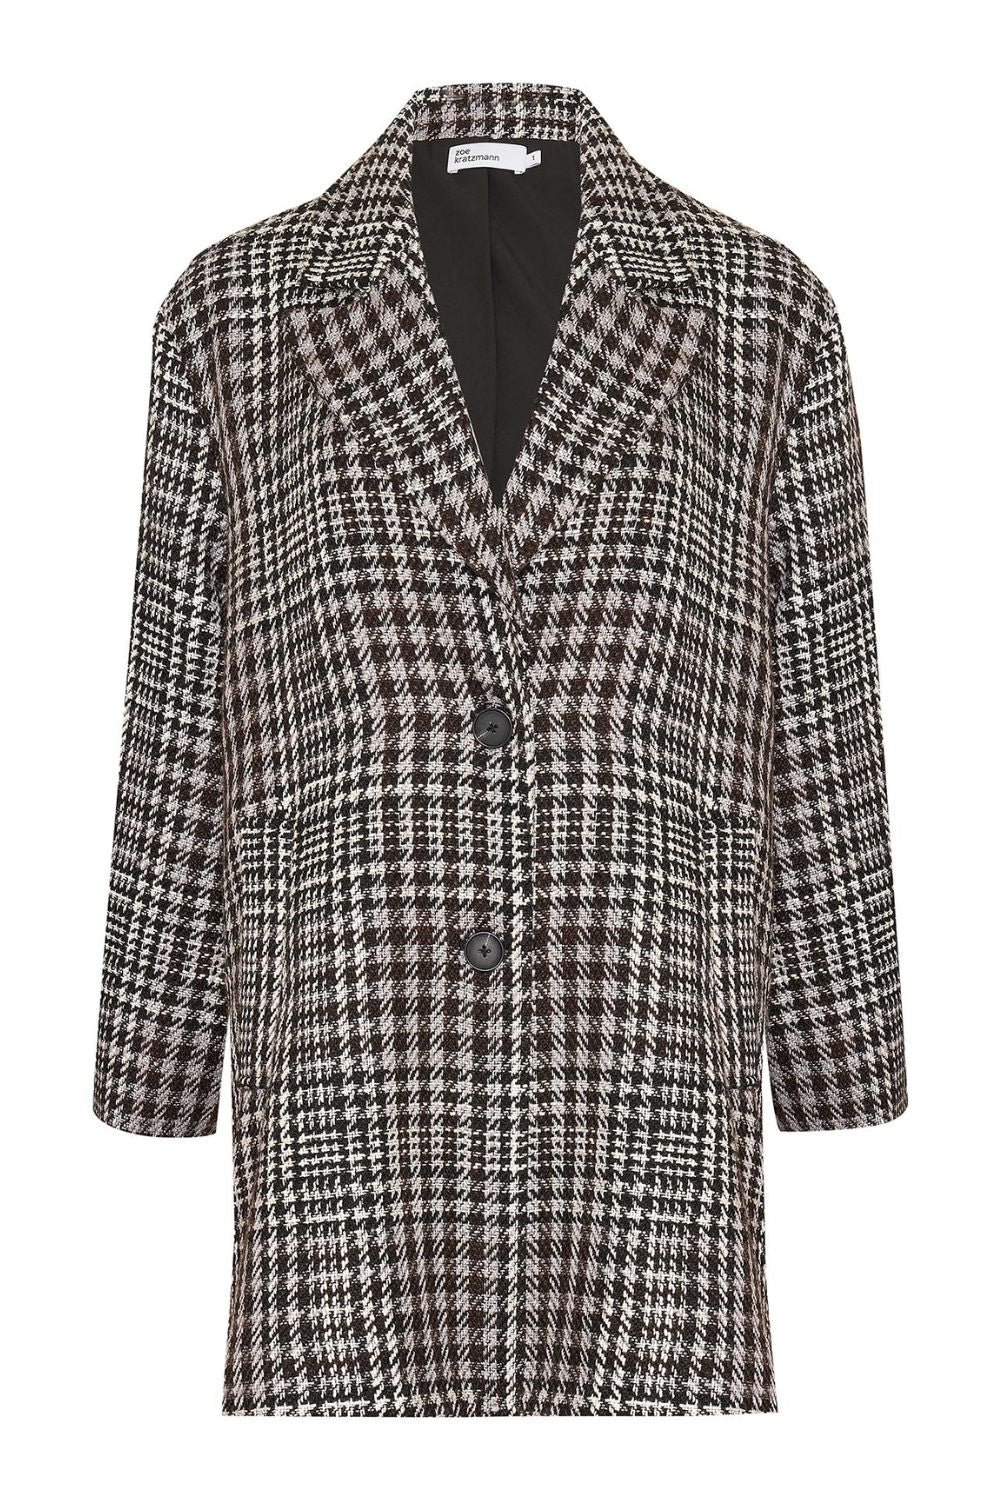 Alight coat - Check Bouclé